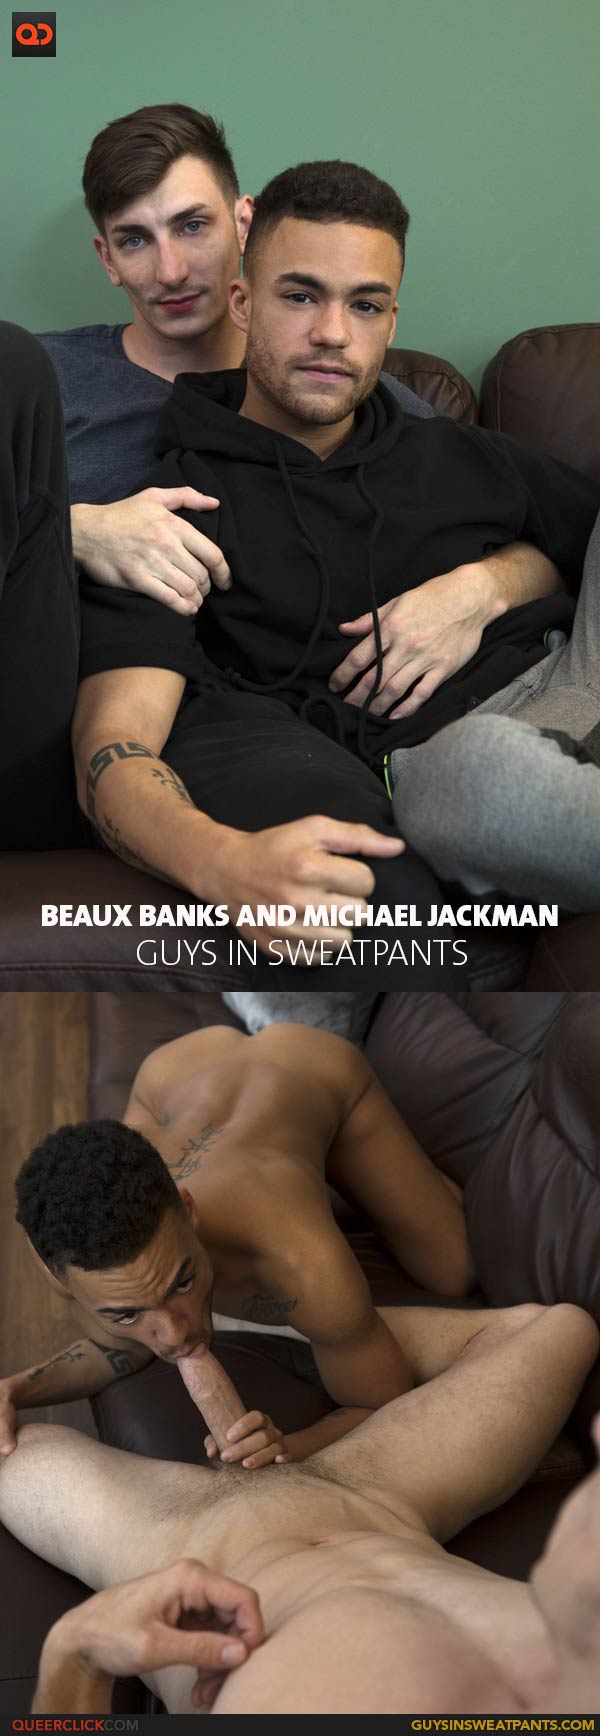 GuysInSweatpants: Beaux Banks and Michael Jackman